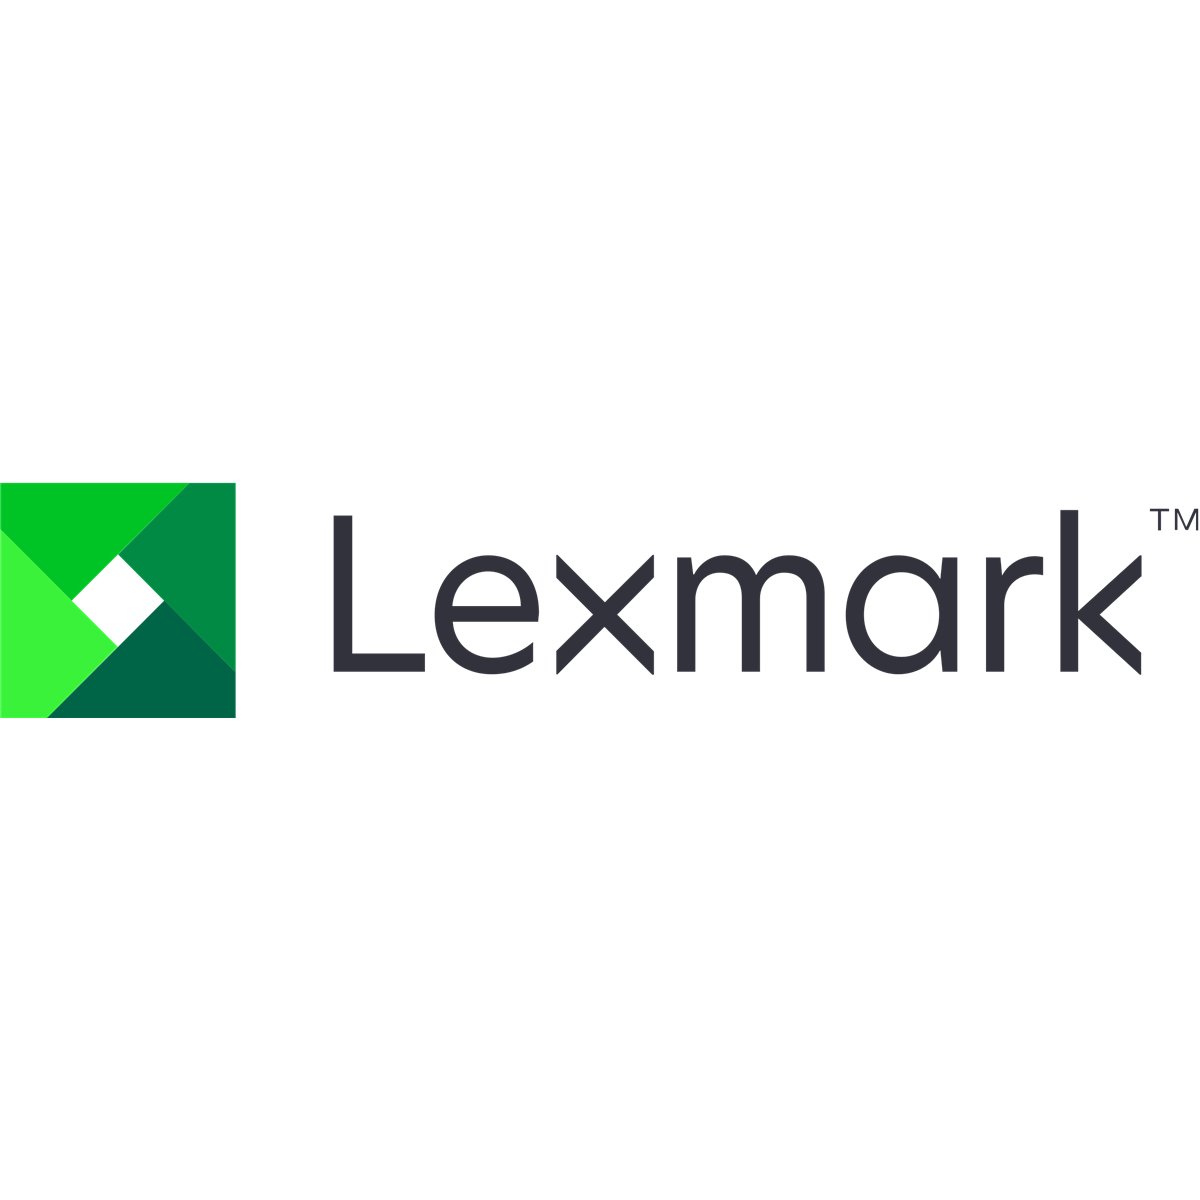 Lexmark MC3426i Multifunktionsgerät color A4 40N9750 - Multifunction Printer - Laser/Led